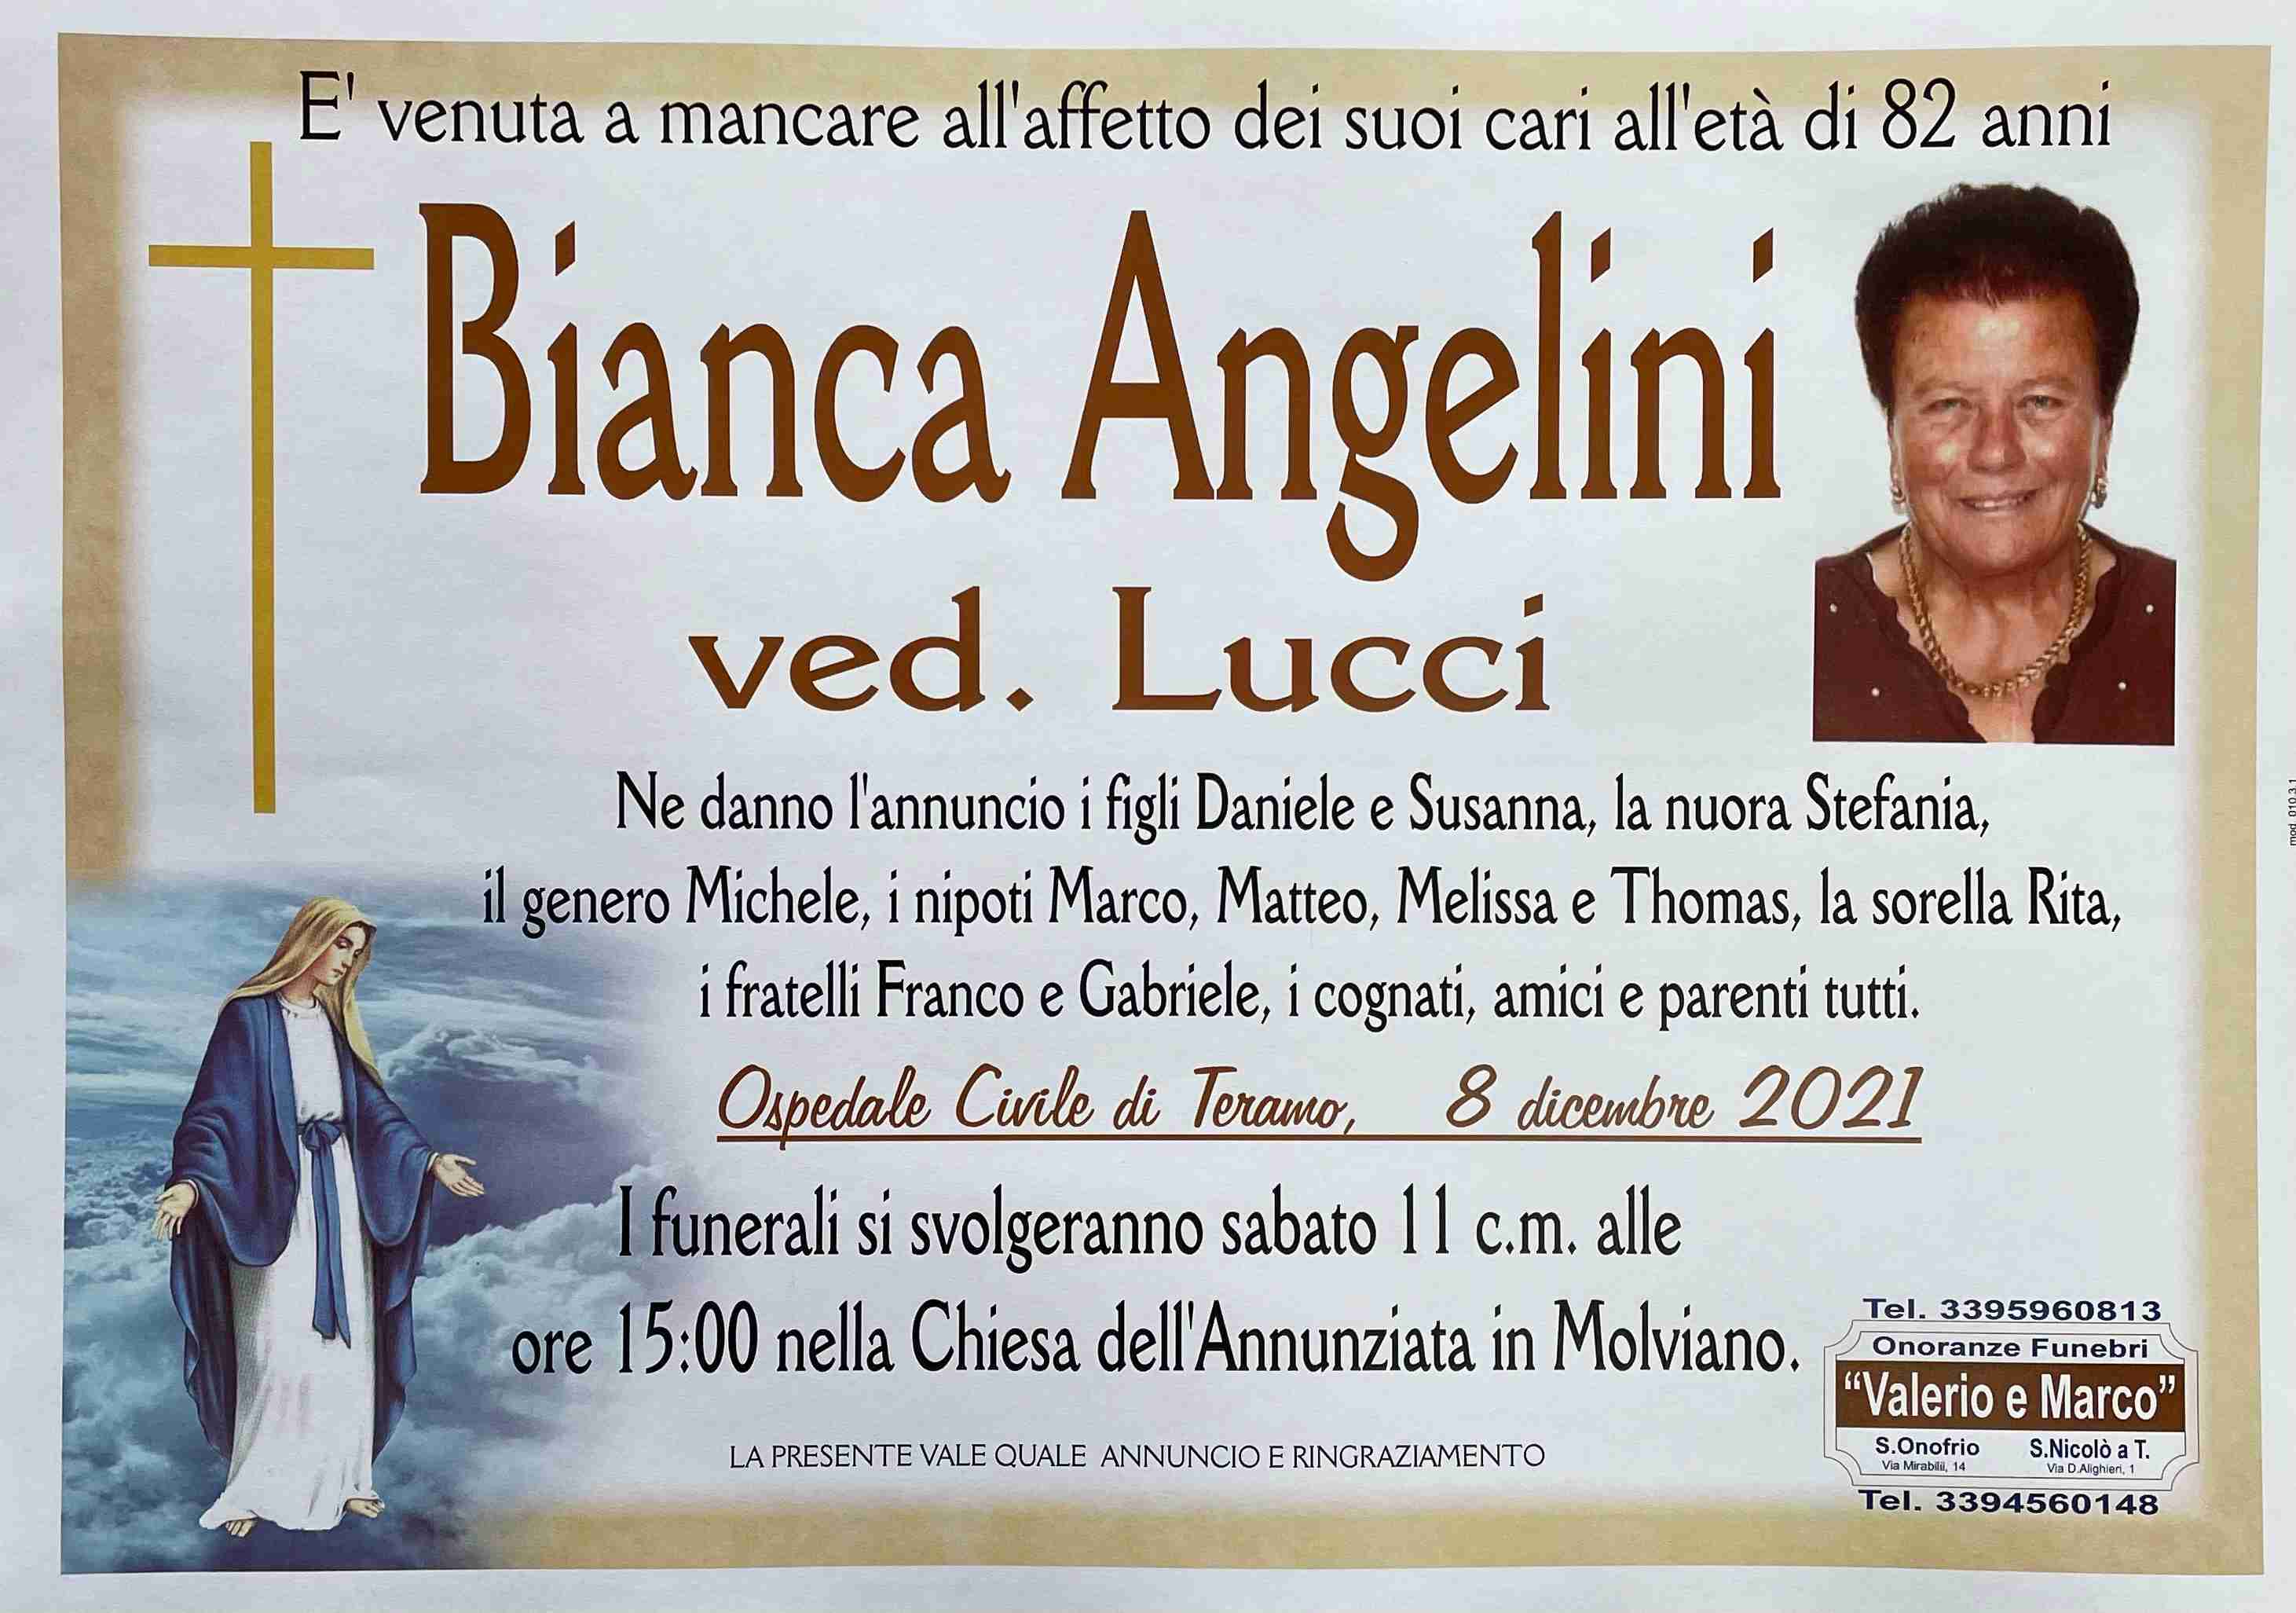 Bianca Angelini